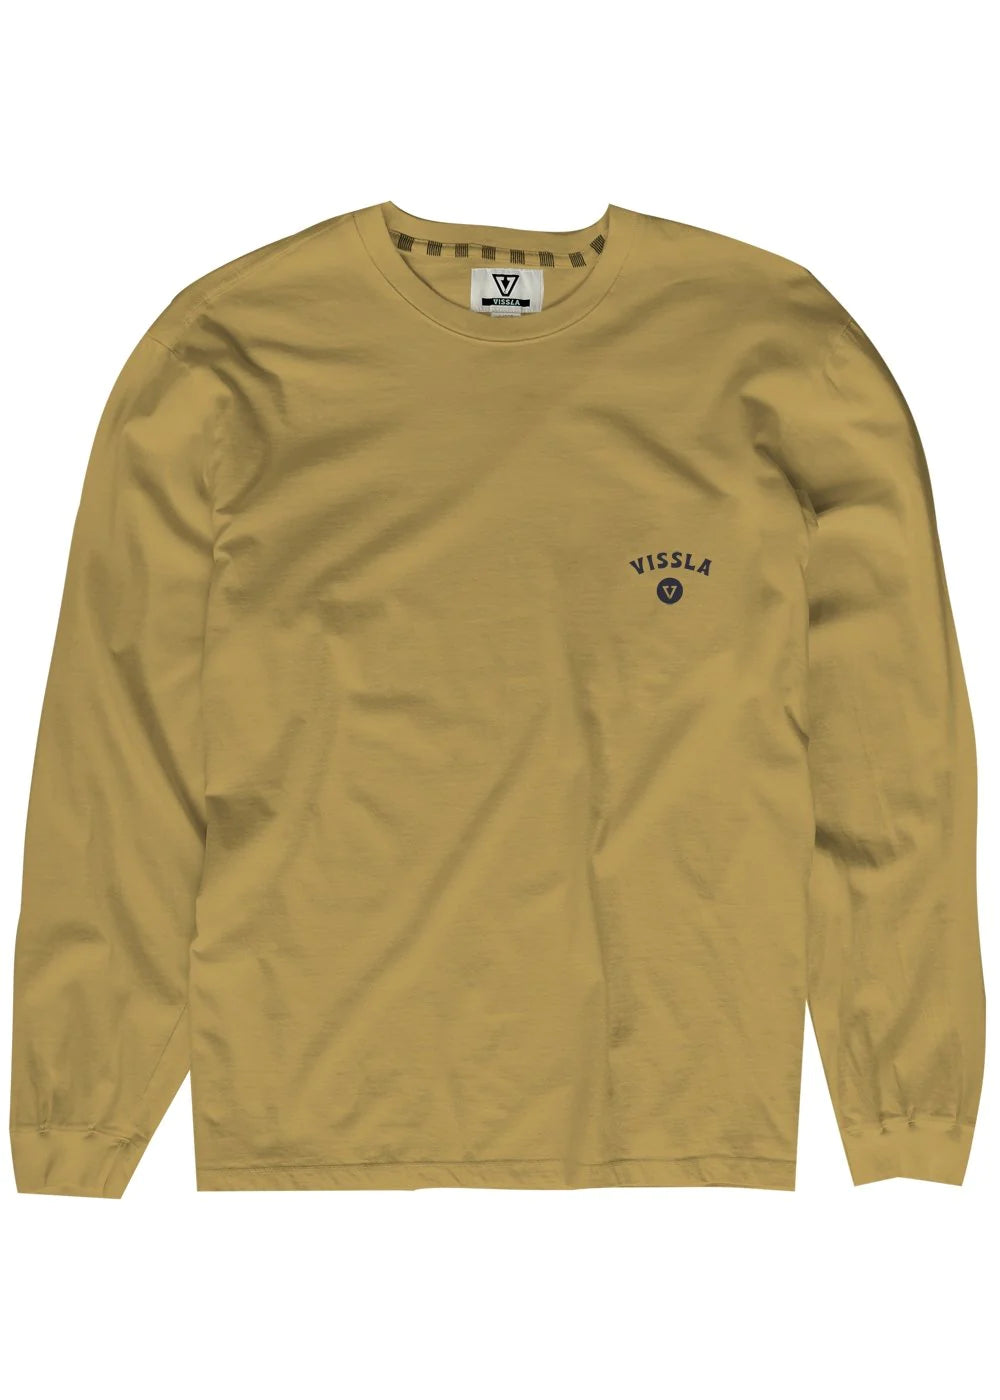 Vissla Quality Goods LS Men's T Shirt - Navy - Ale Mens T Shirt